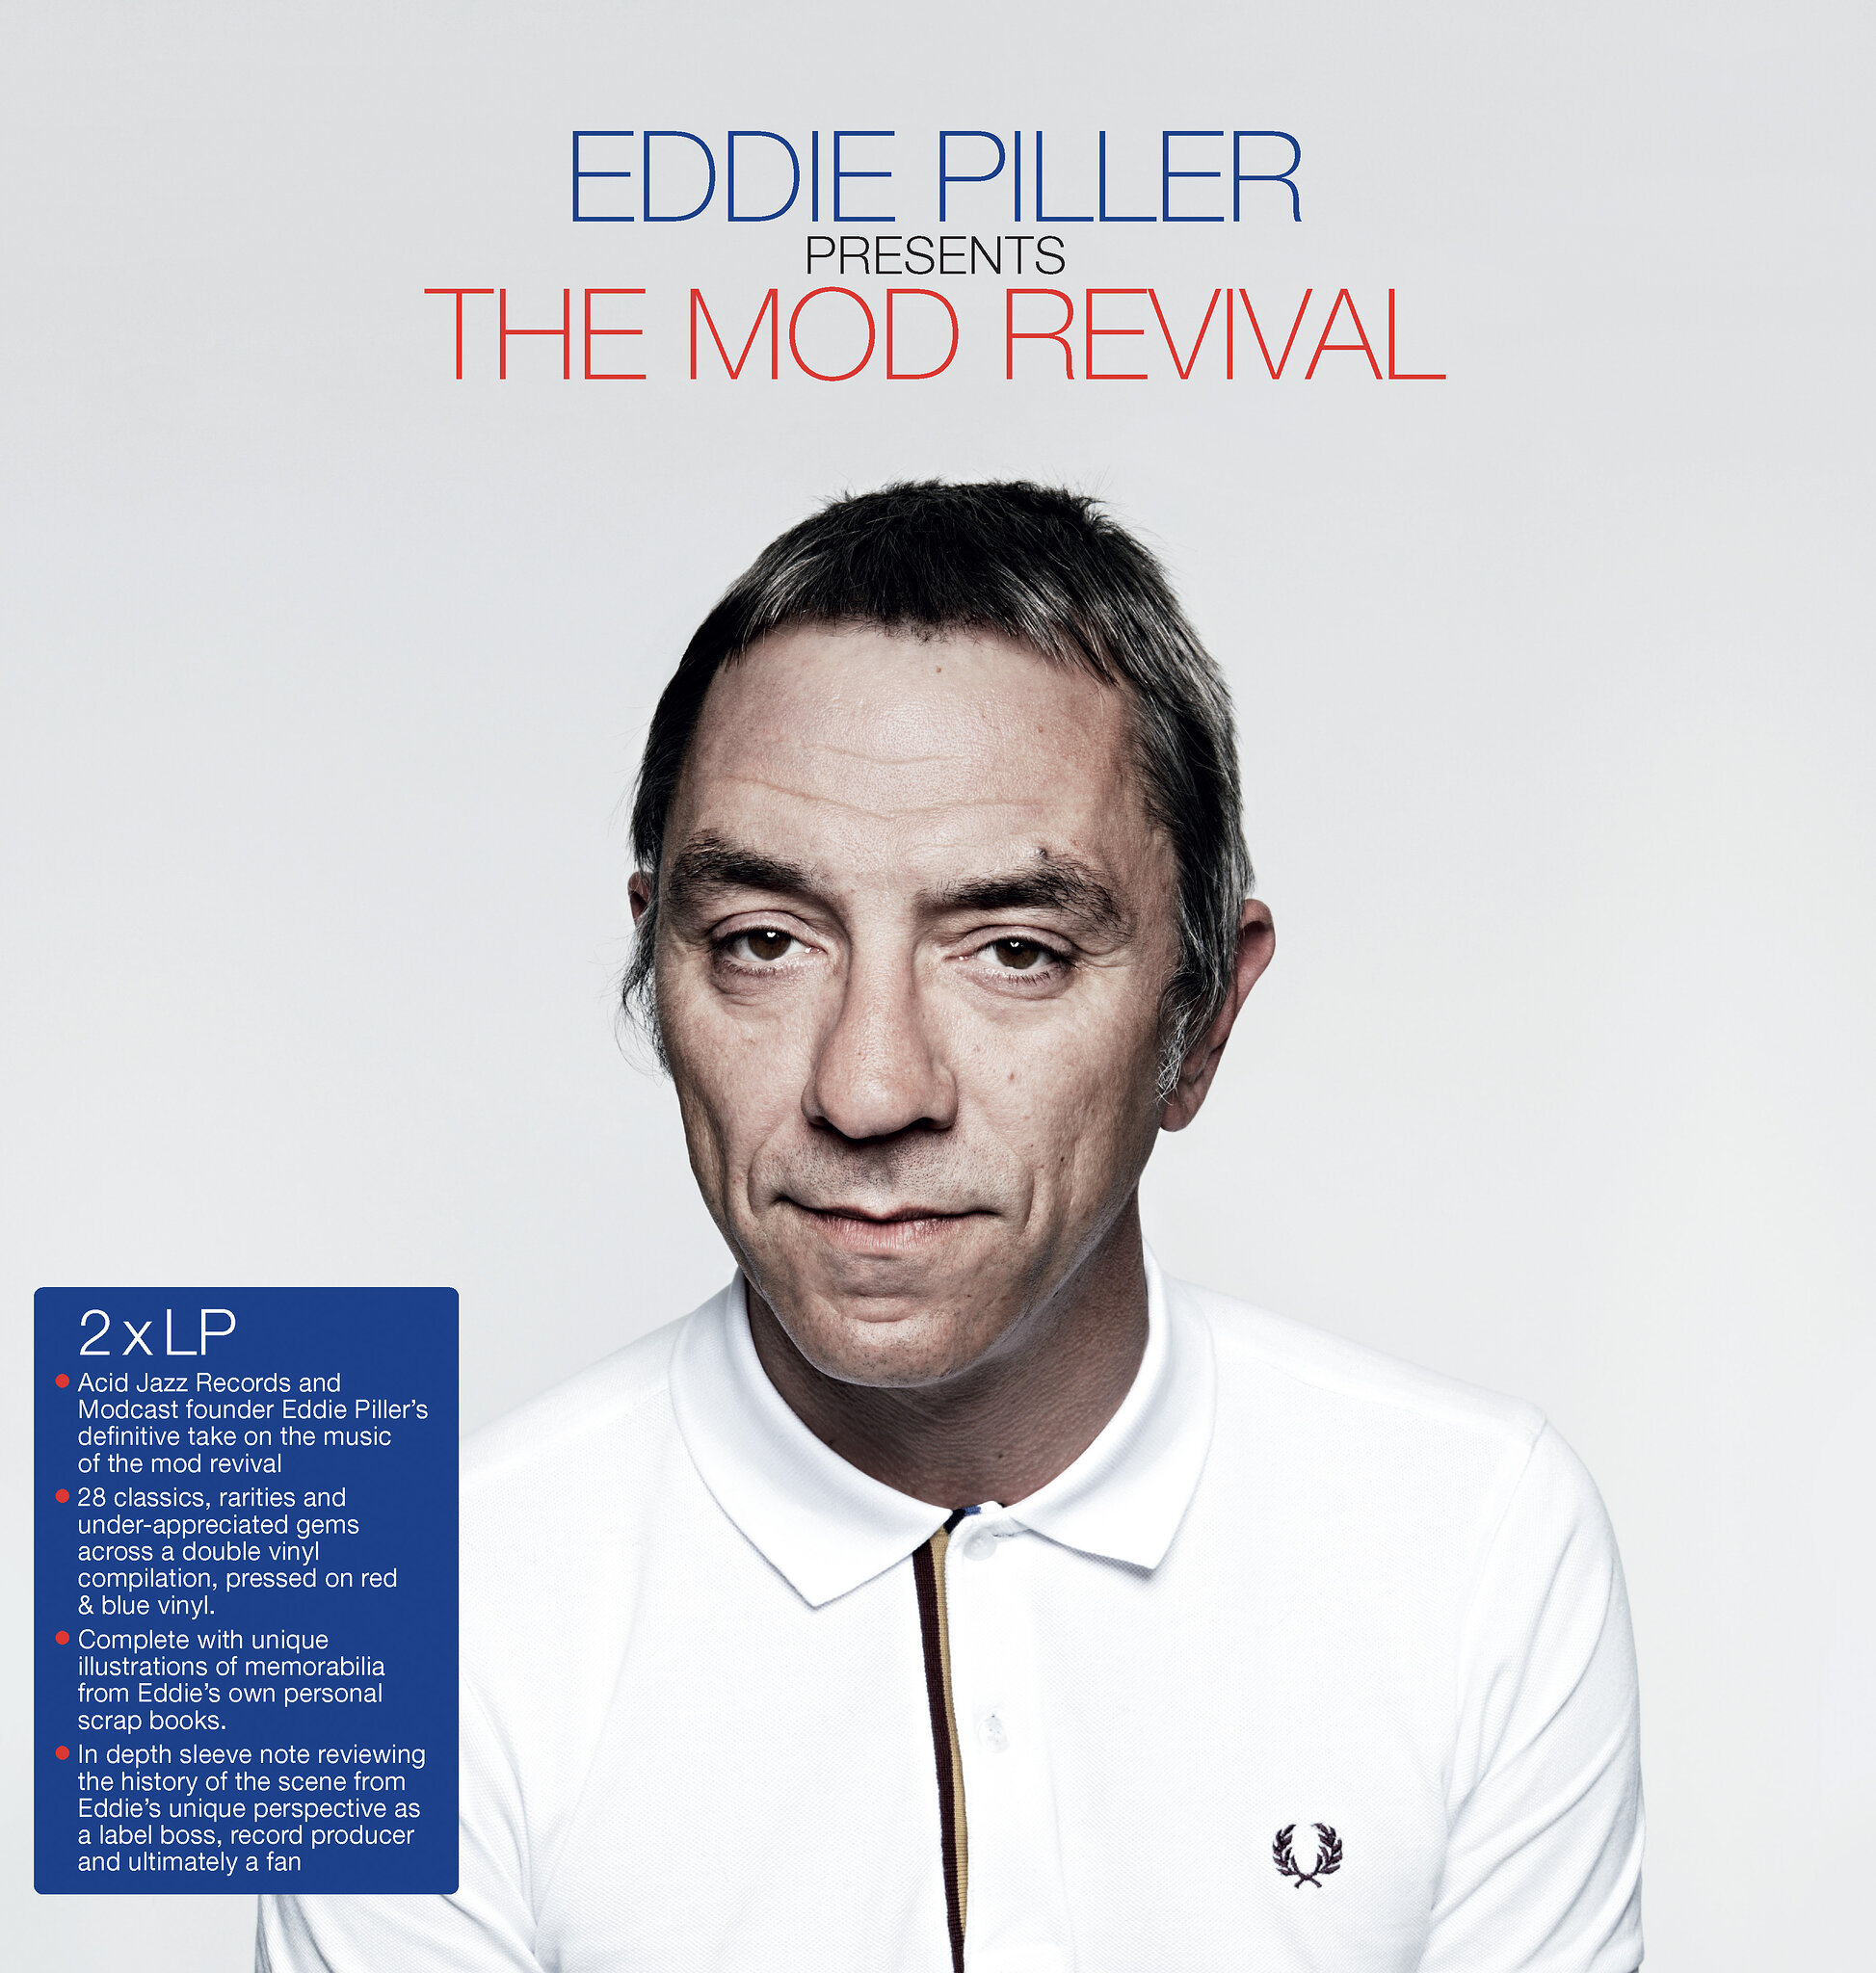 Eddie Piller: Mod Revival